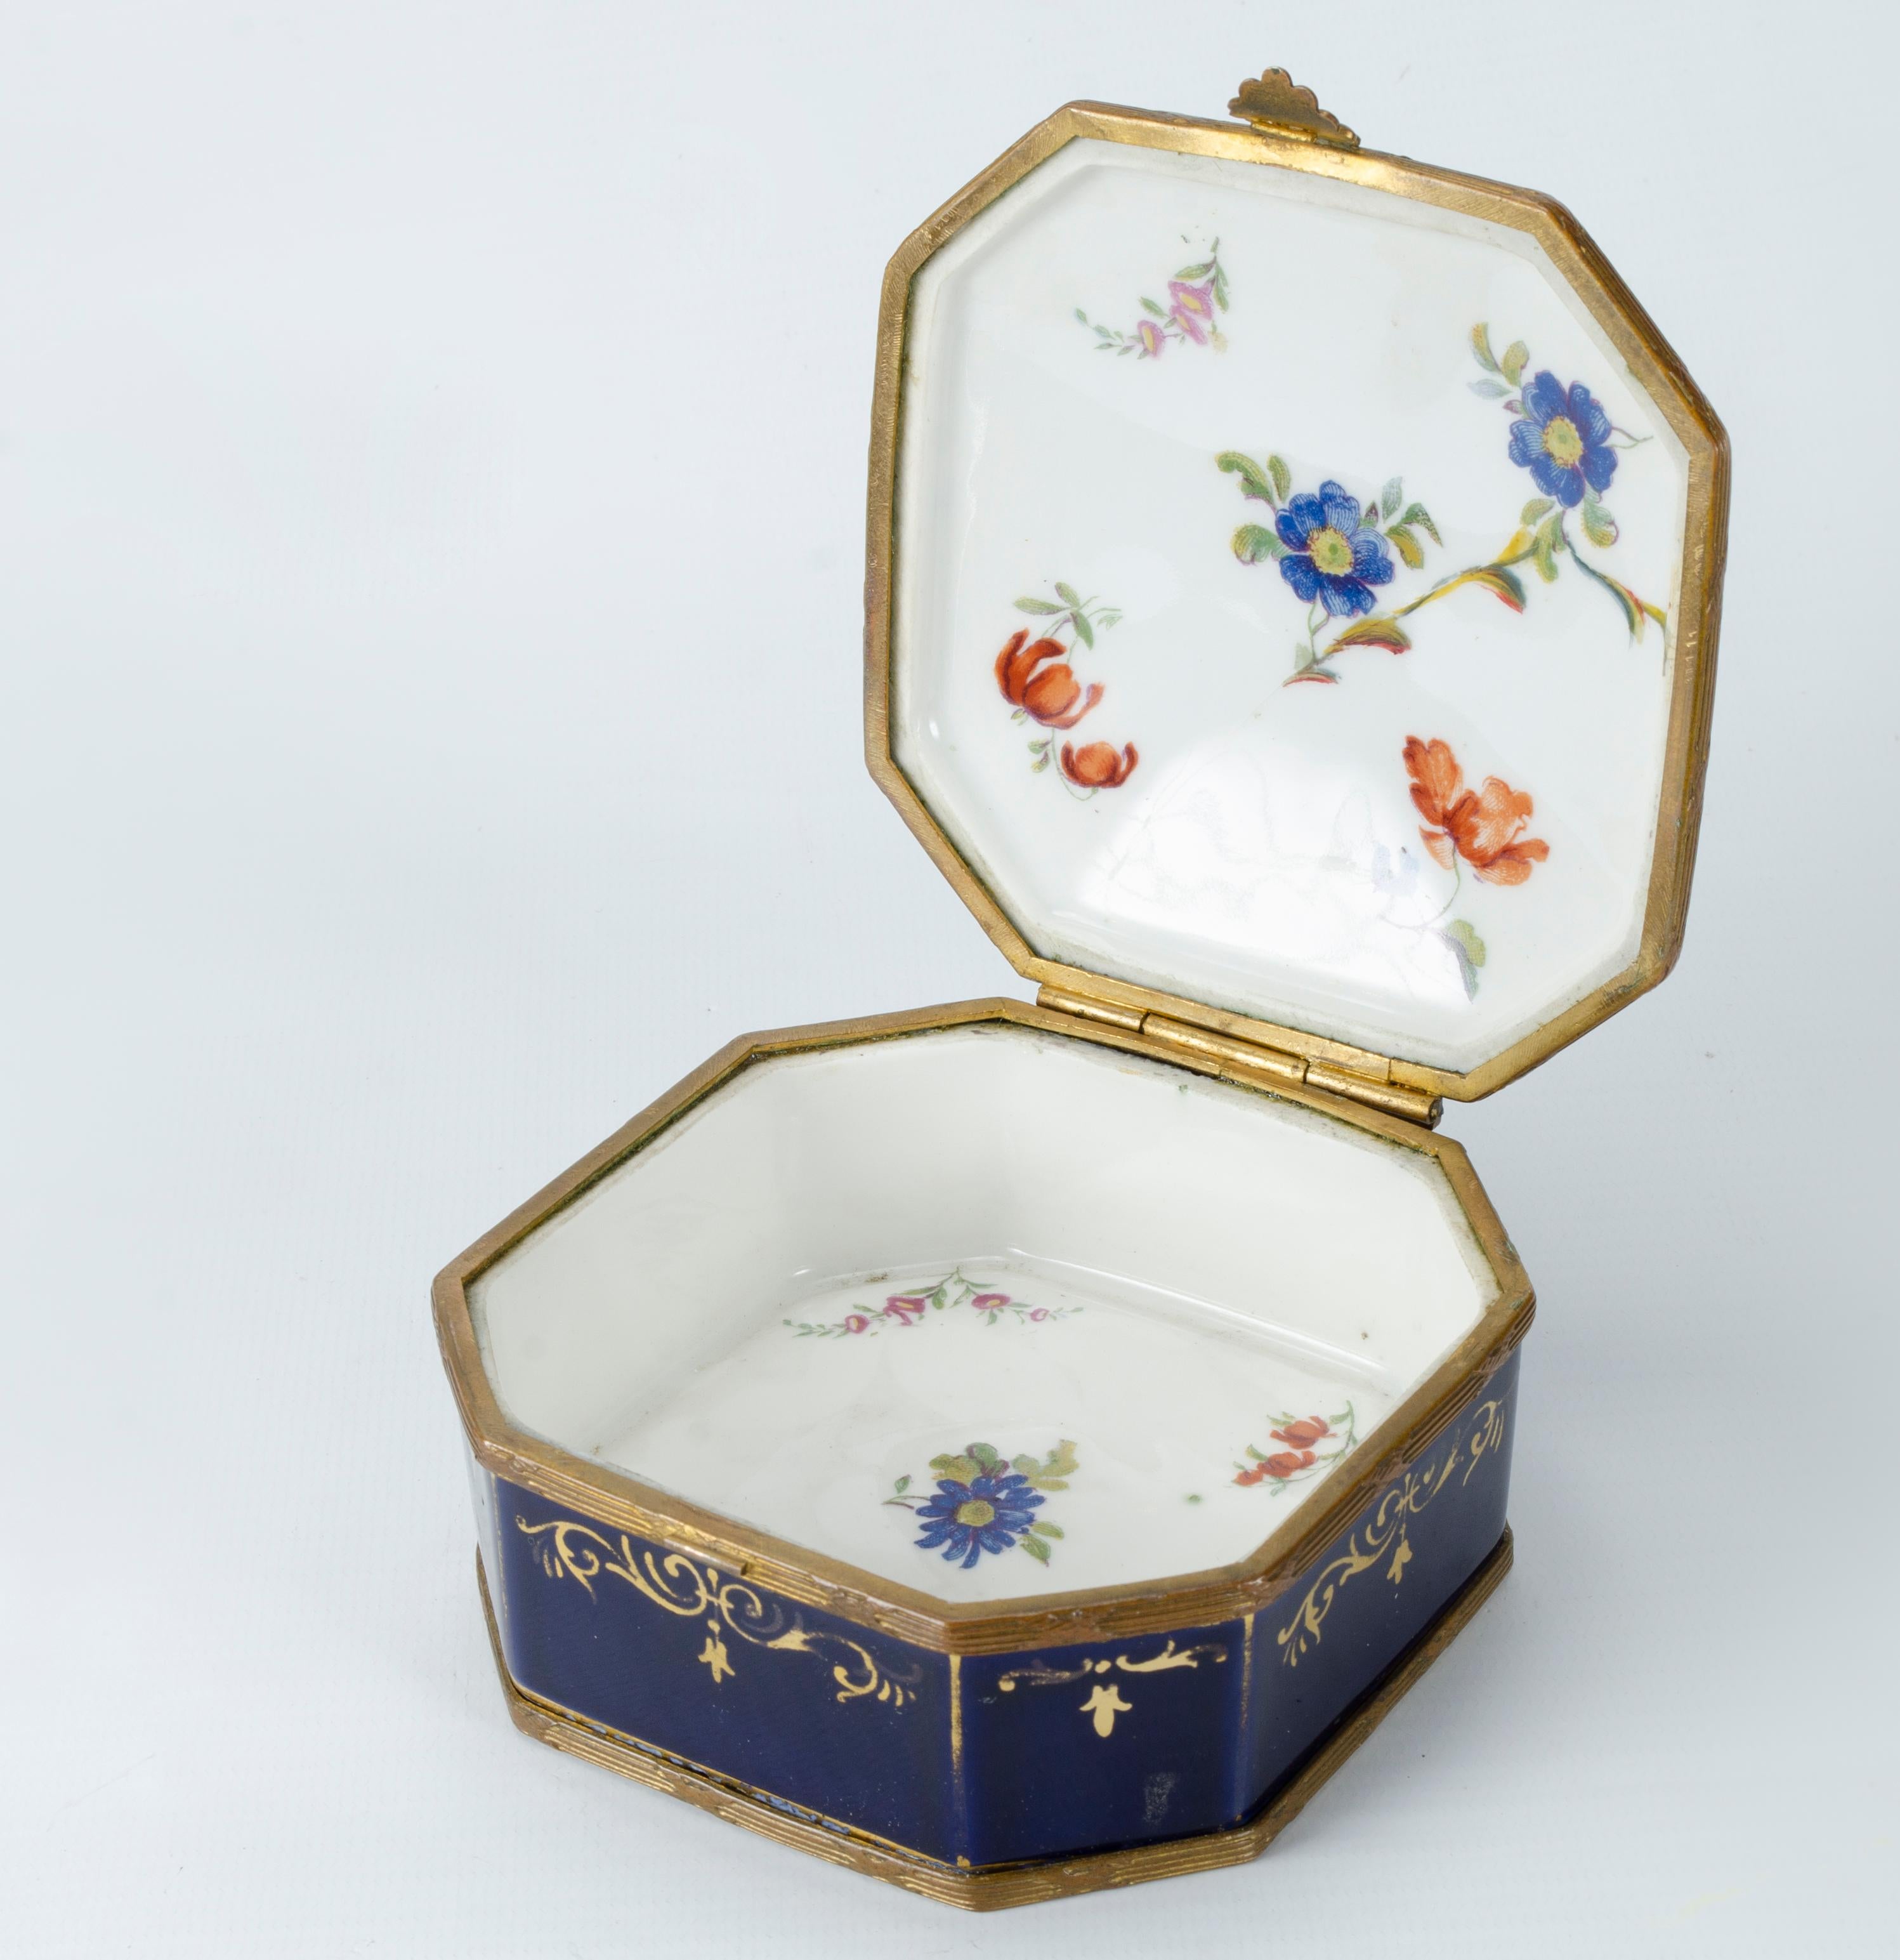 Sevres porcelain box
Origin France Circa 1900
Interior decoration (flowers)
bronze mount
hand painted box.